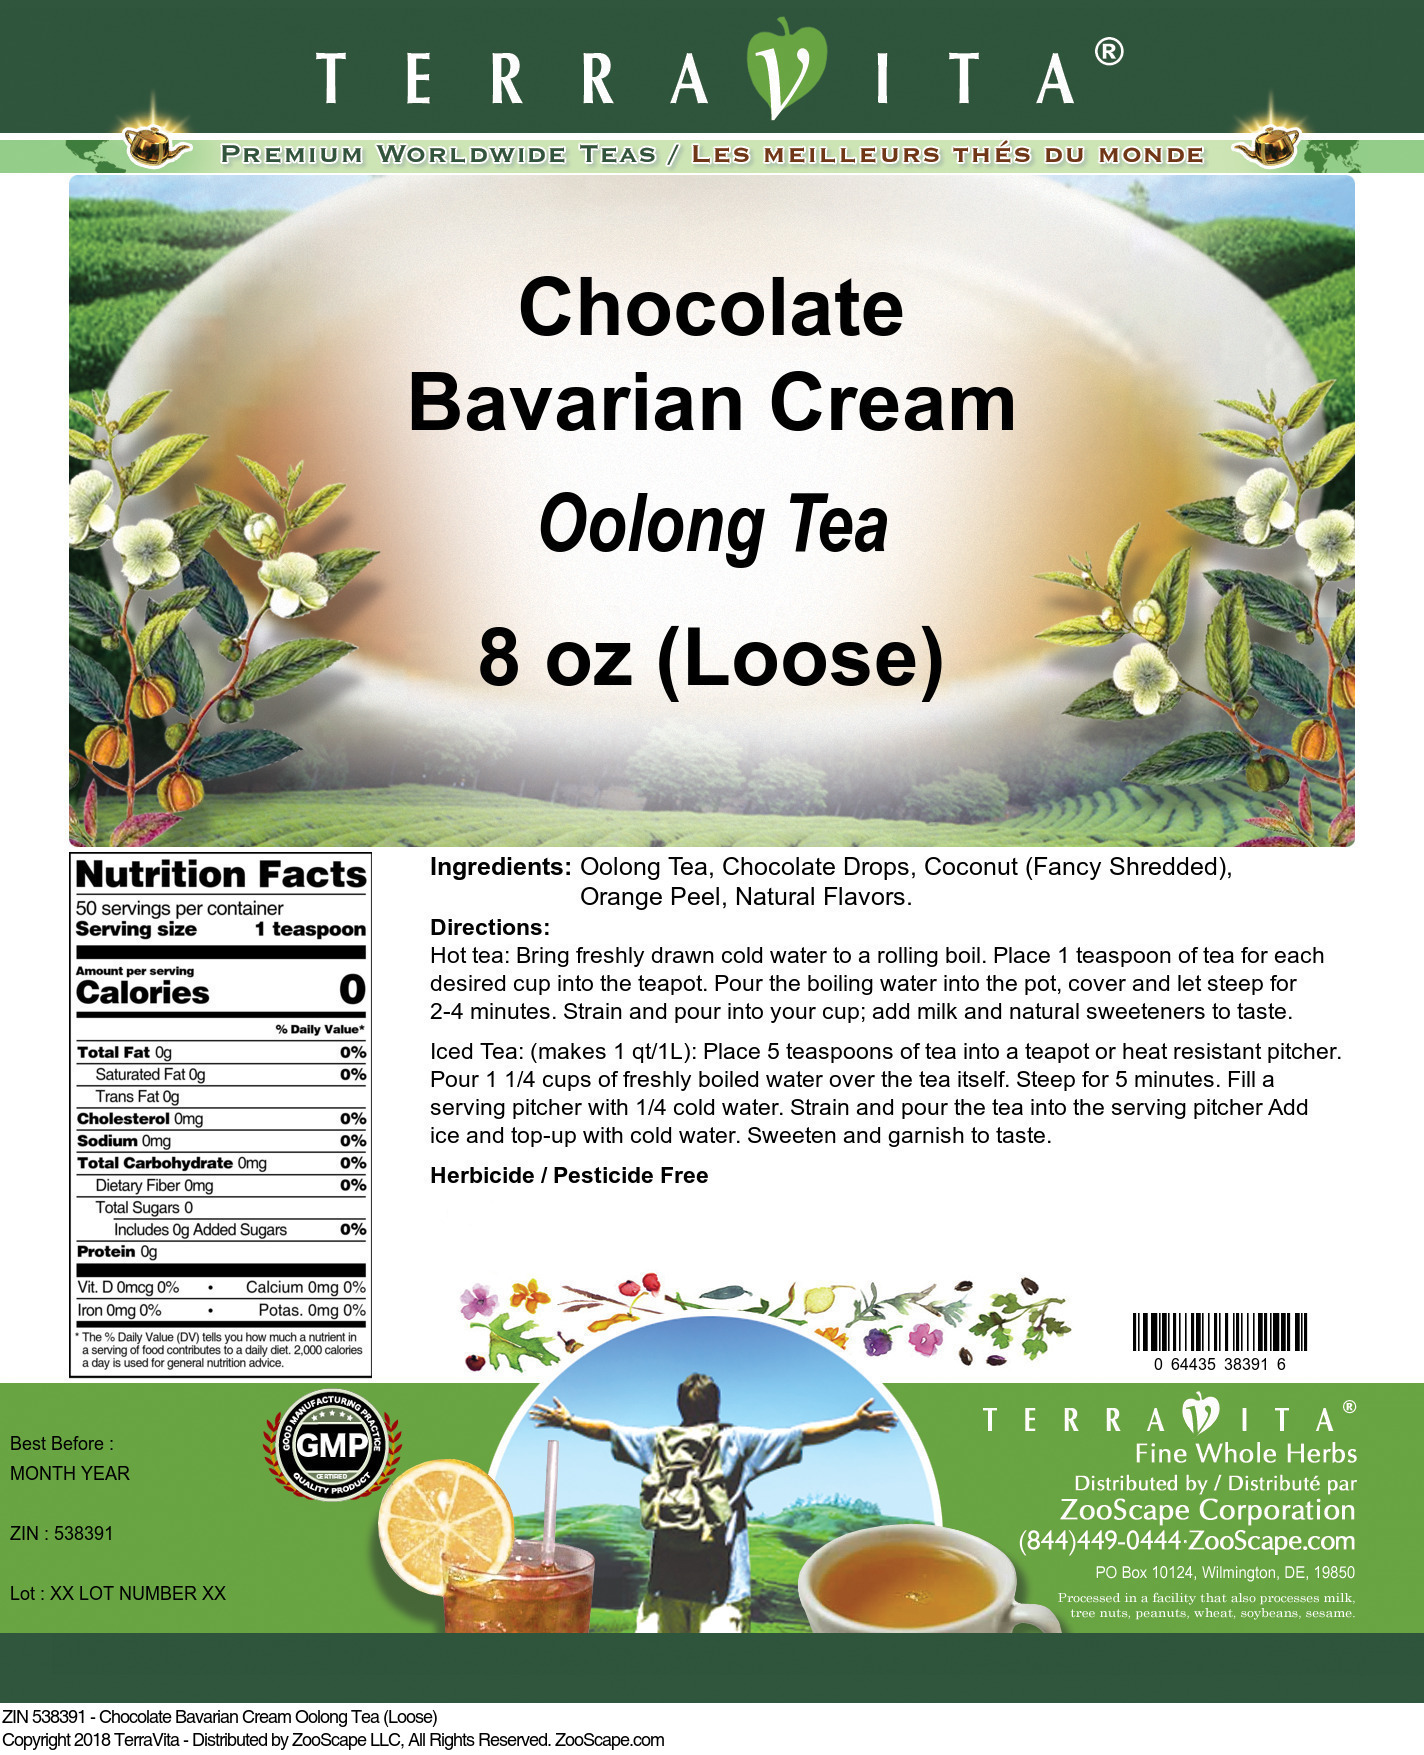 Chocolate Bavarian Cream Oolong Tea (Loose) - Label